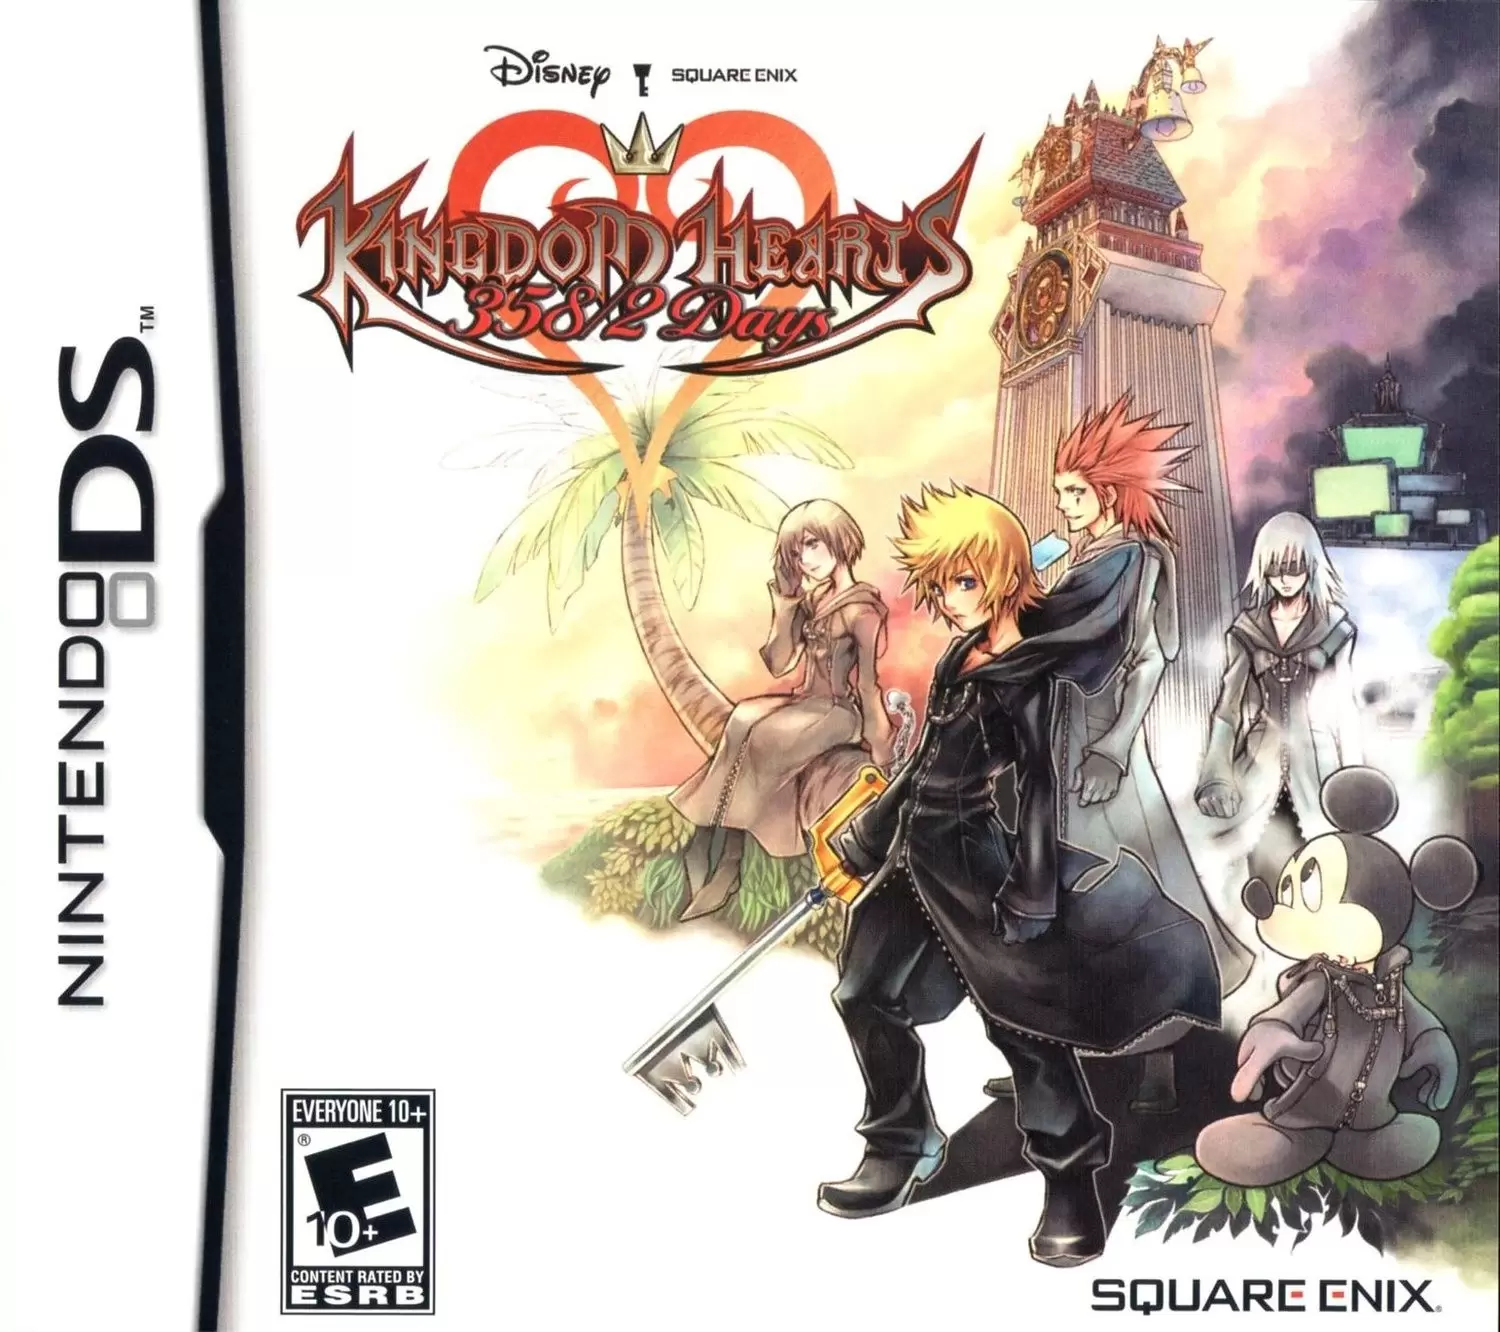 Nintendo DS Games - Kingdom Hearts 358-2 Days